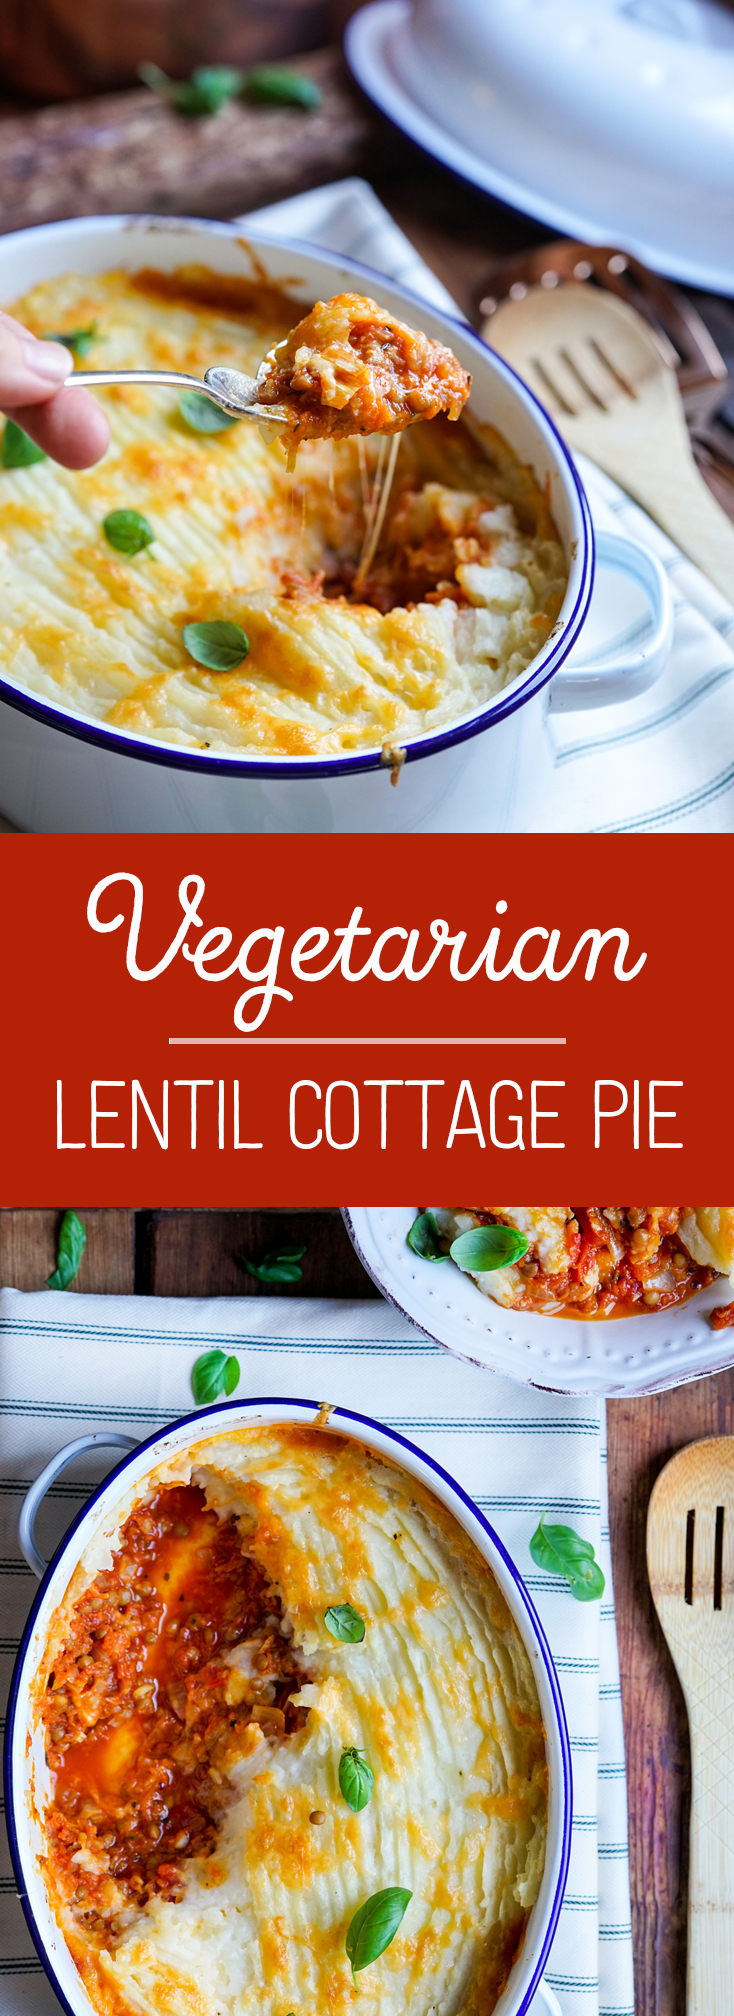 Easy vegetarian recipe for Lentil Cottage Pie